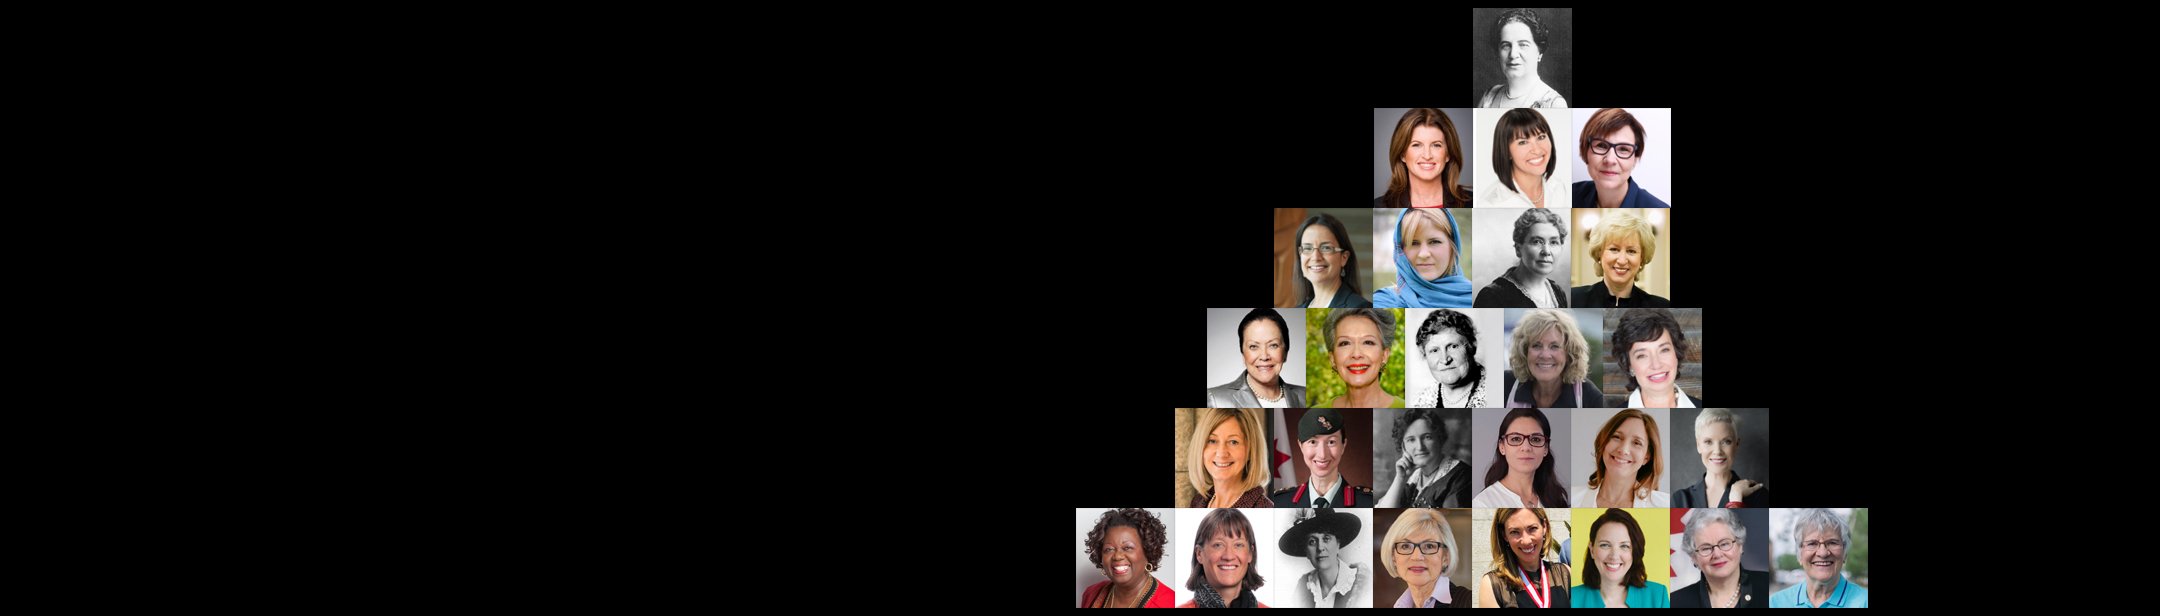   Virtual Pink Teas   featuring inspiring Canadian women leaders   BUY A SEASON'S PASS  